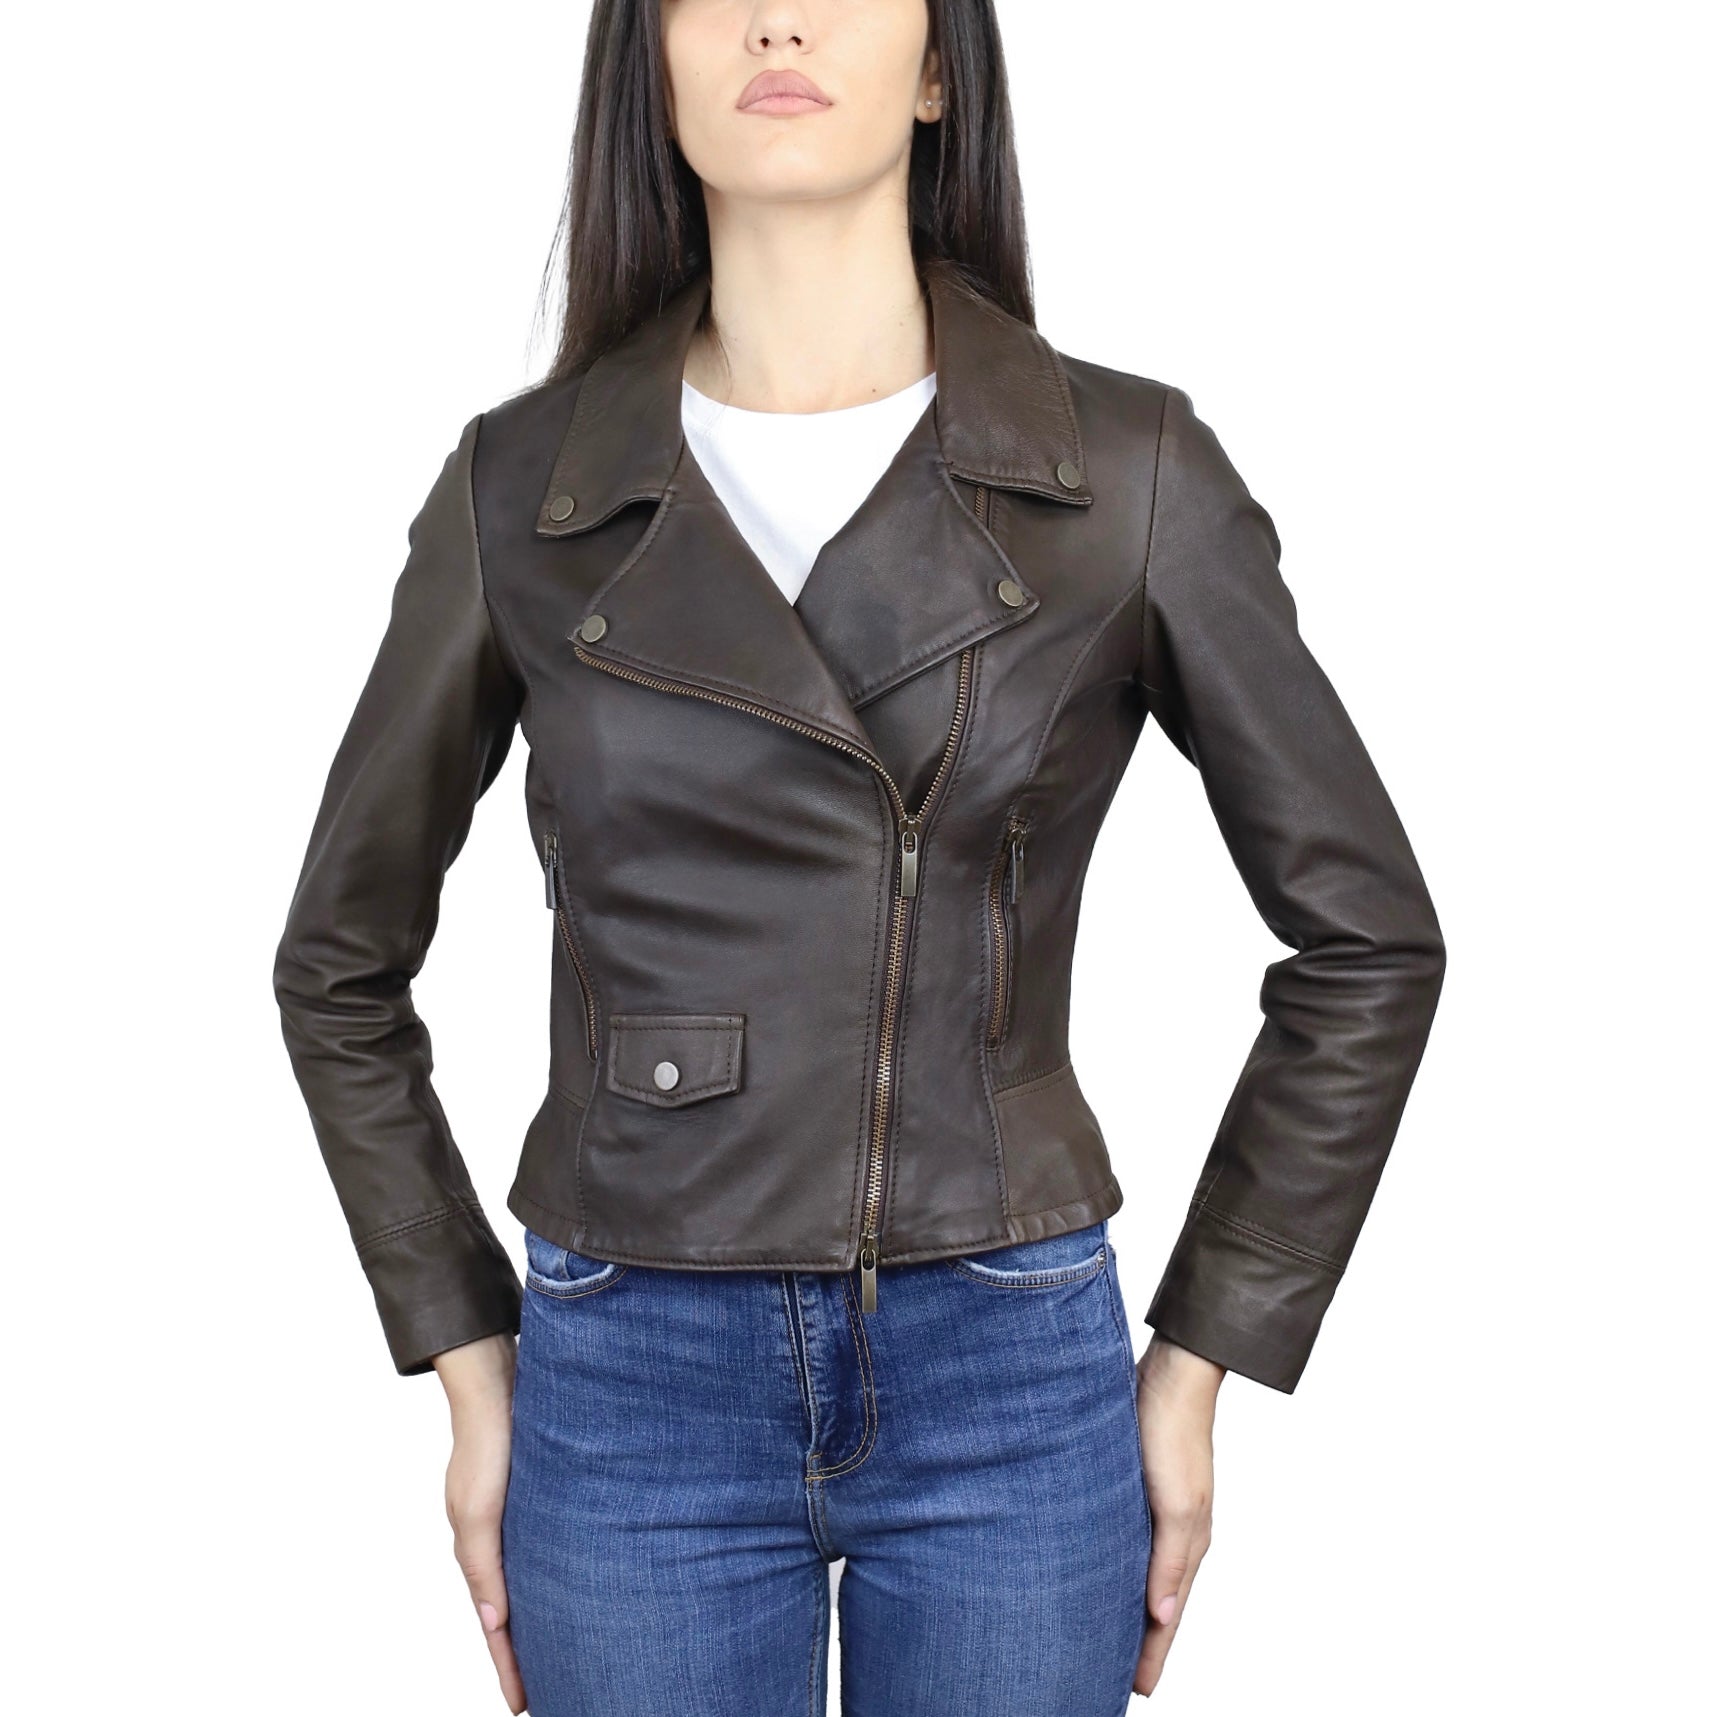 99DAWMB leather jacket